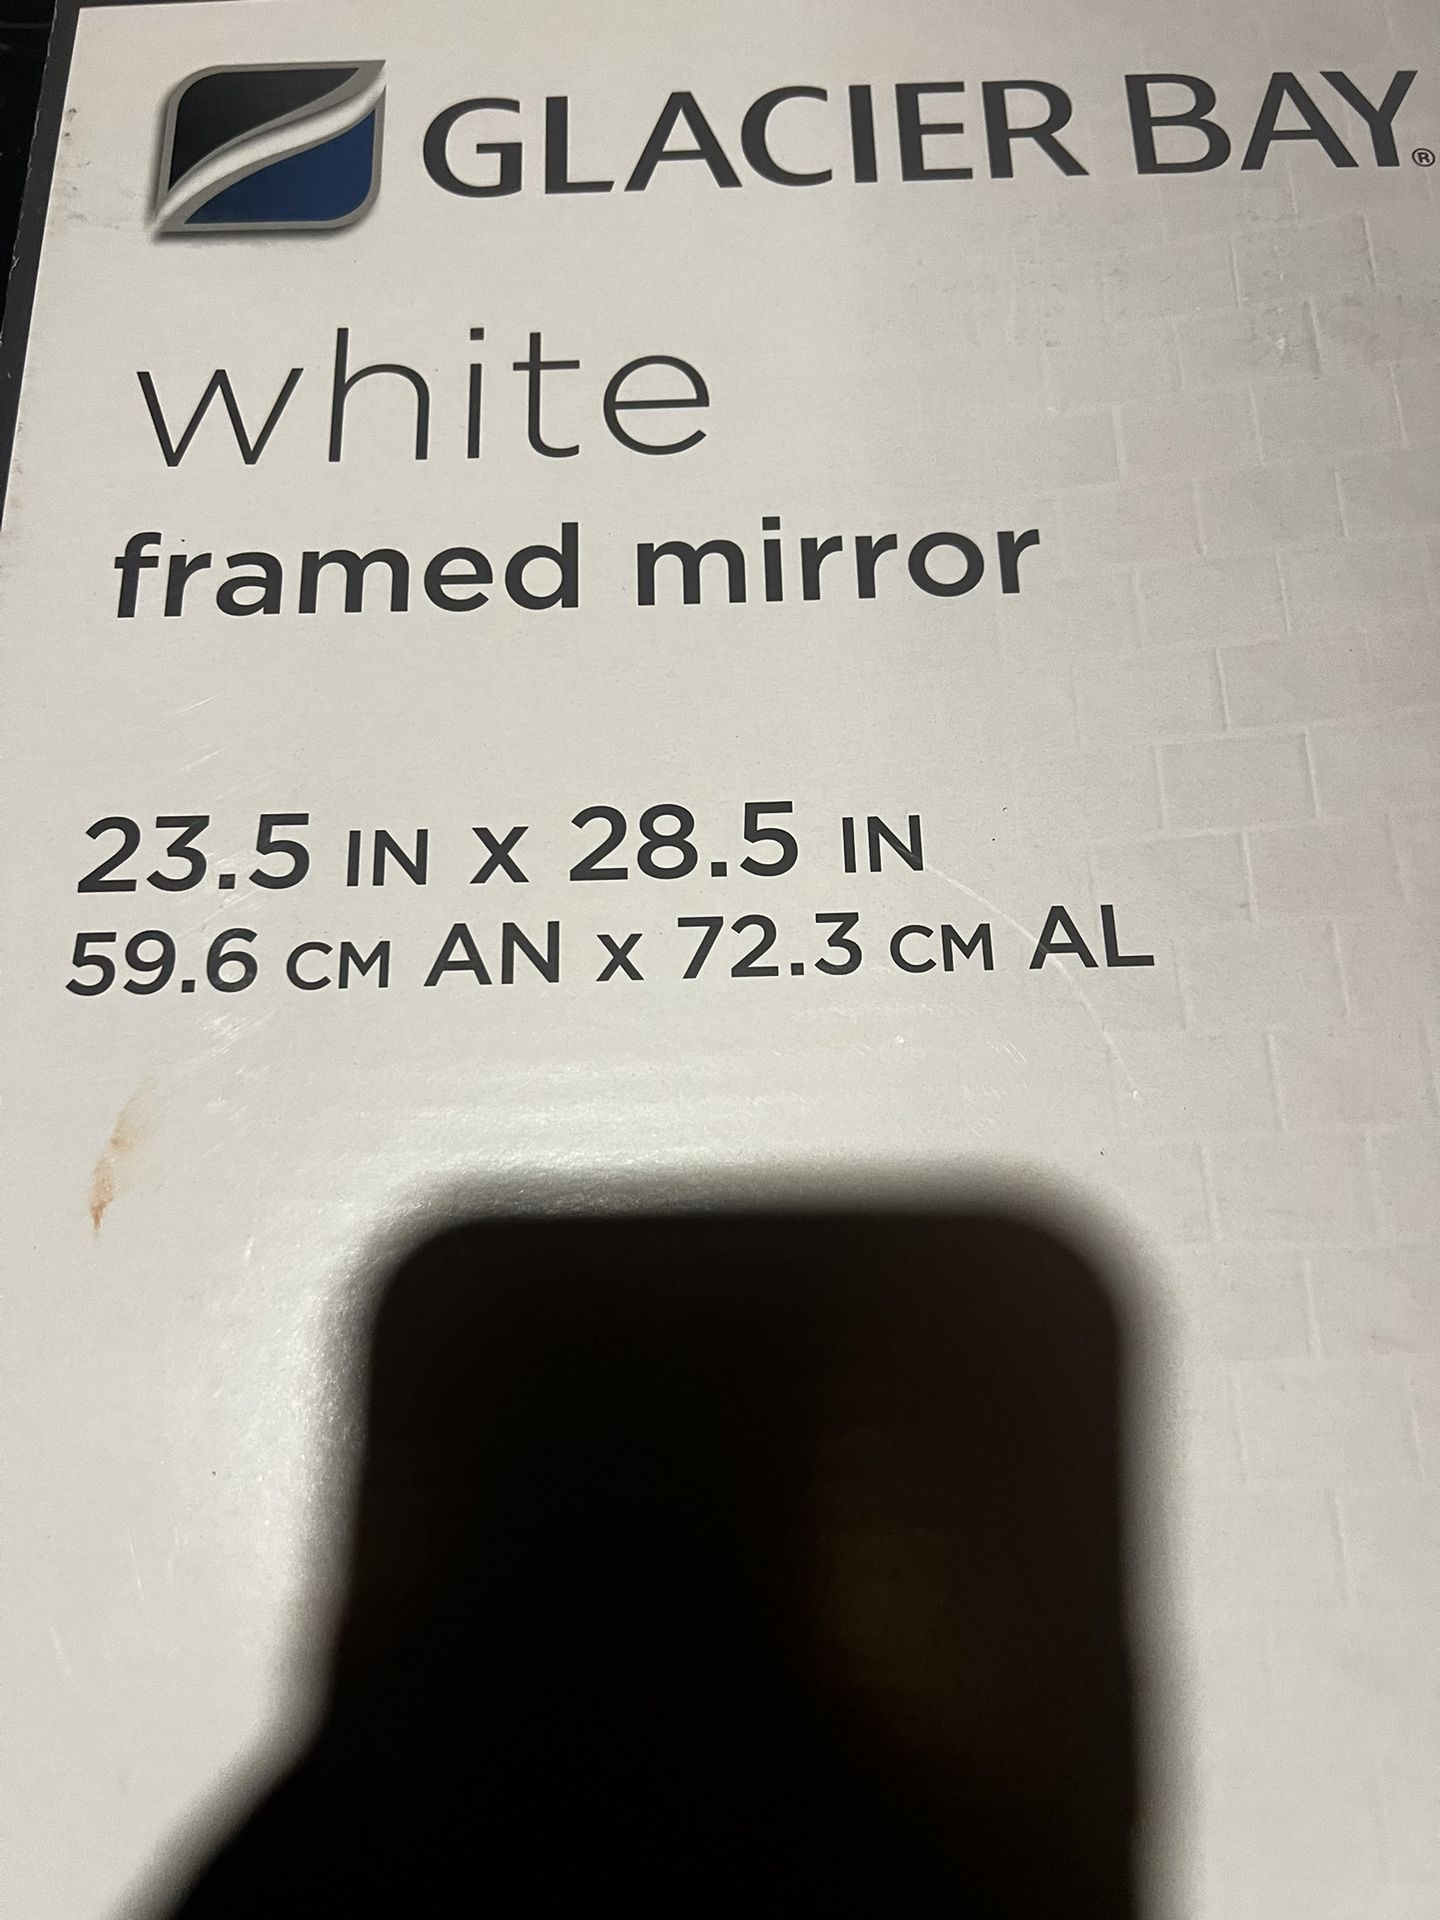 New Mirror